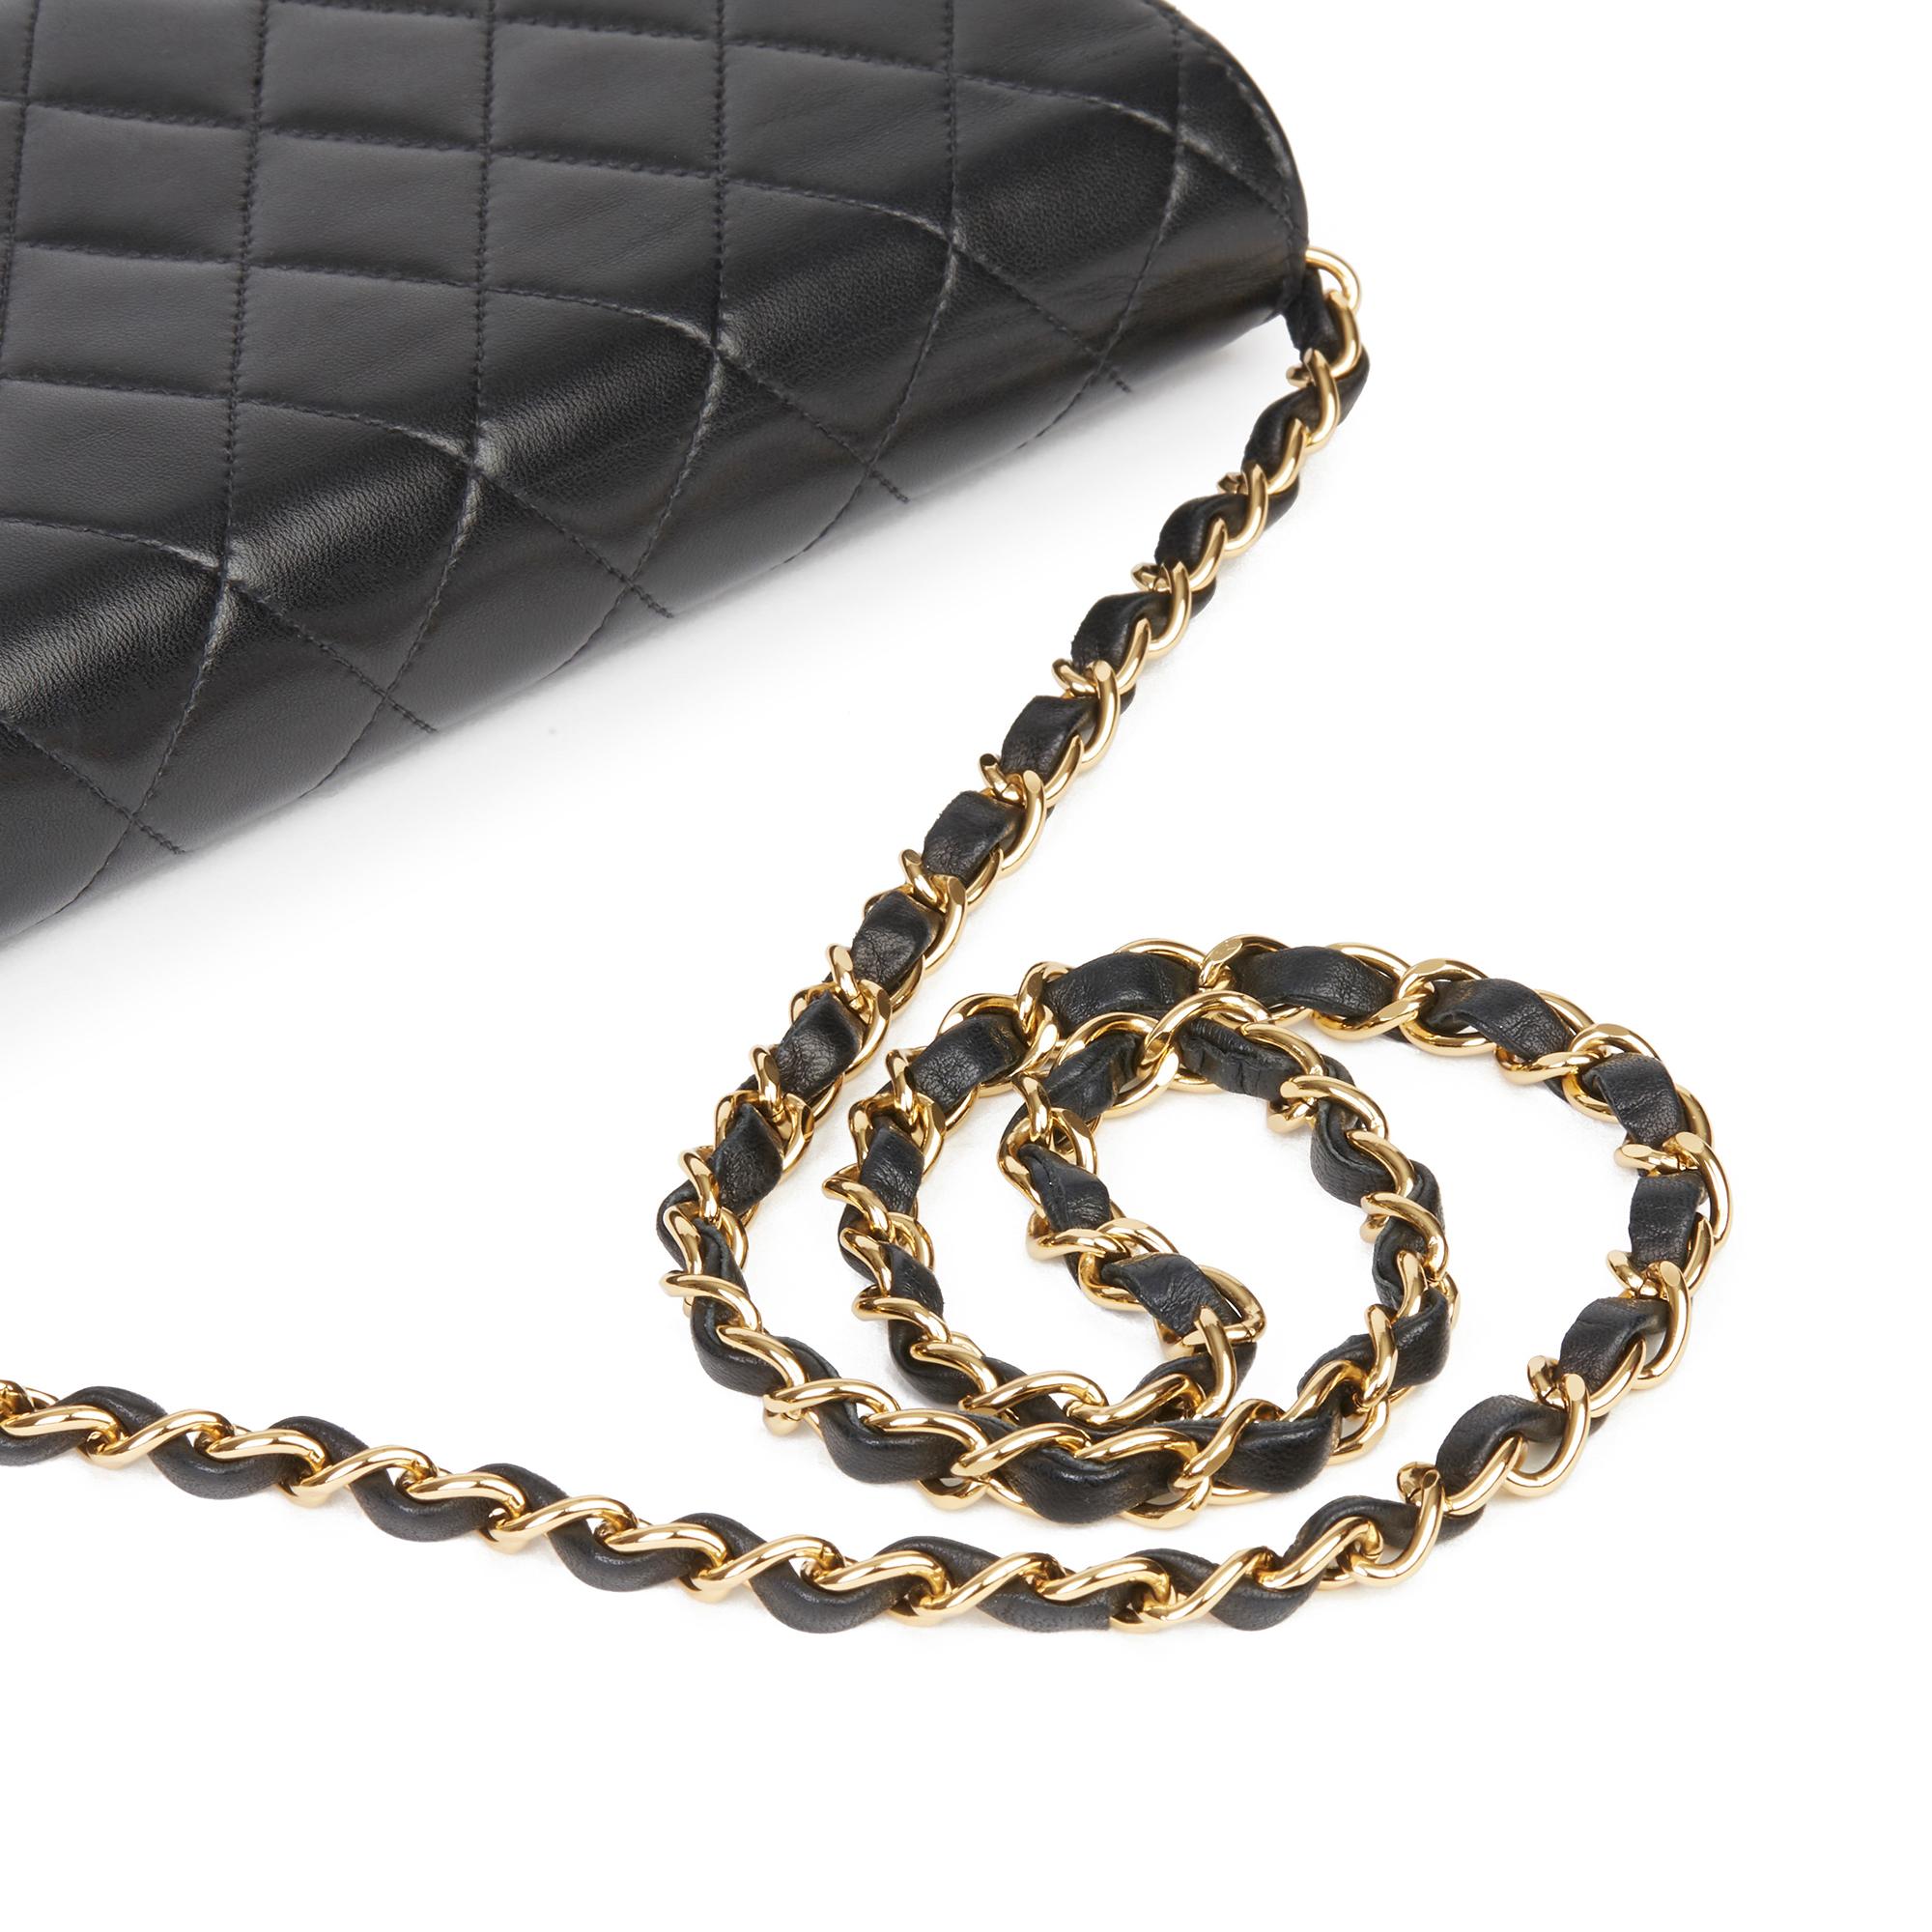 Women's 2000 Chanel Black Quilted Lambskin Vintage Medium Classic Single Flap Bag 